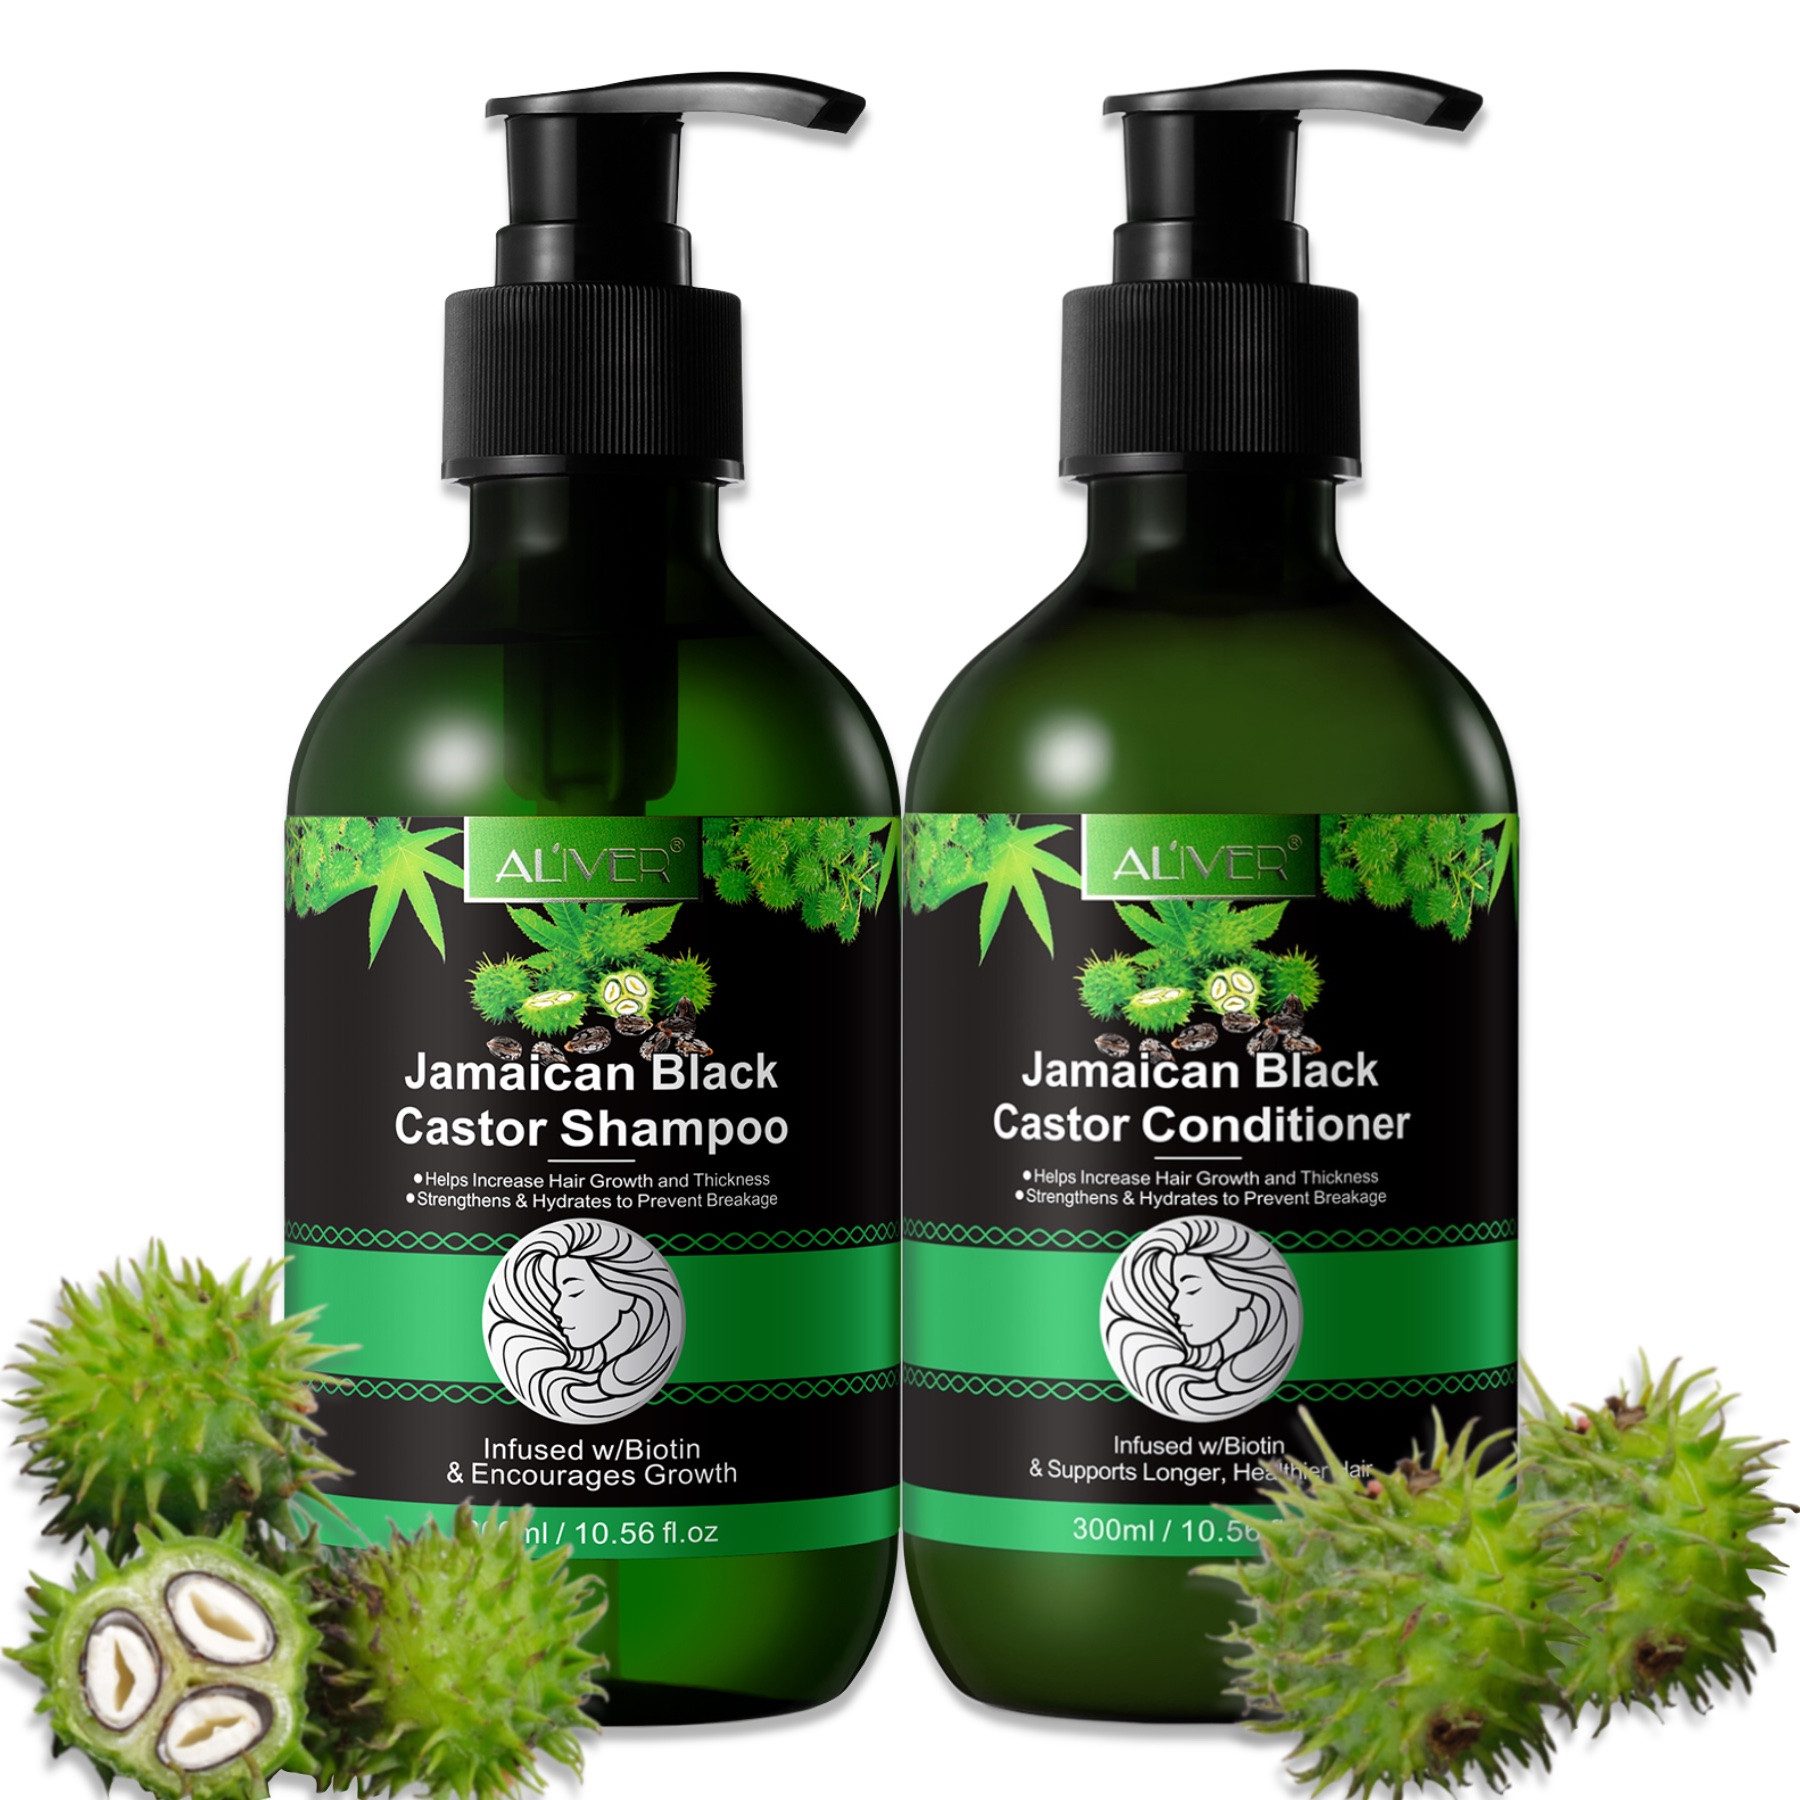 ALIVER Haarpflege-Set Shampoo Conditioner Haarmaske Haaröl Rizinus Vegan